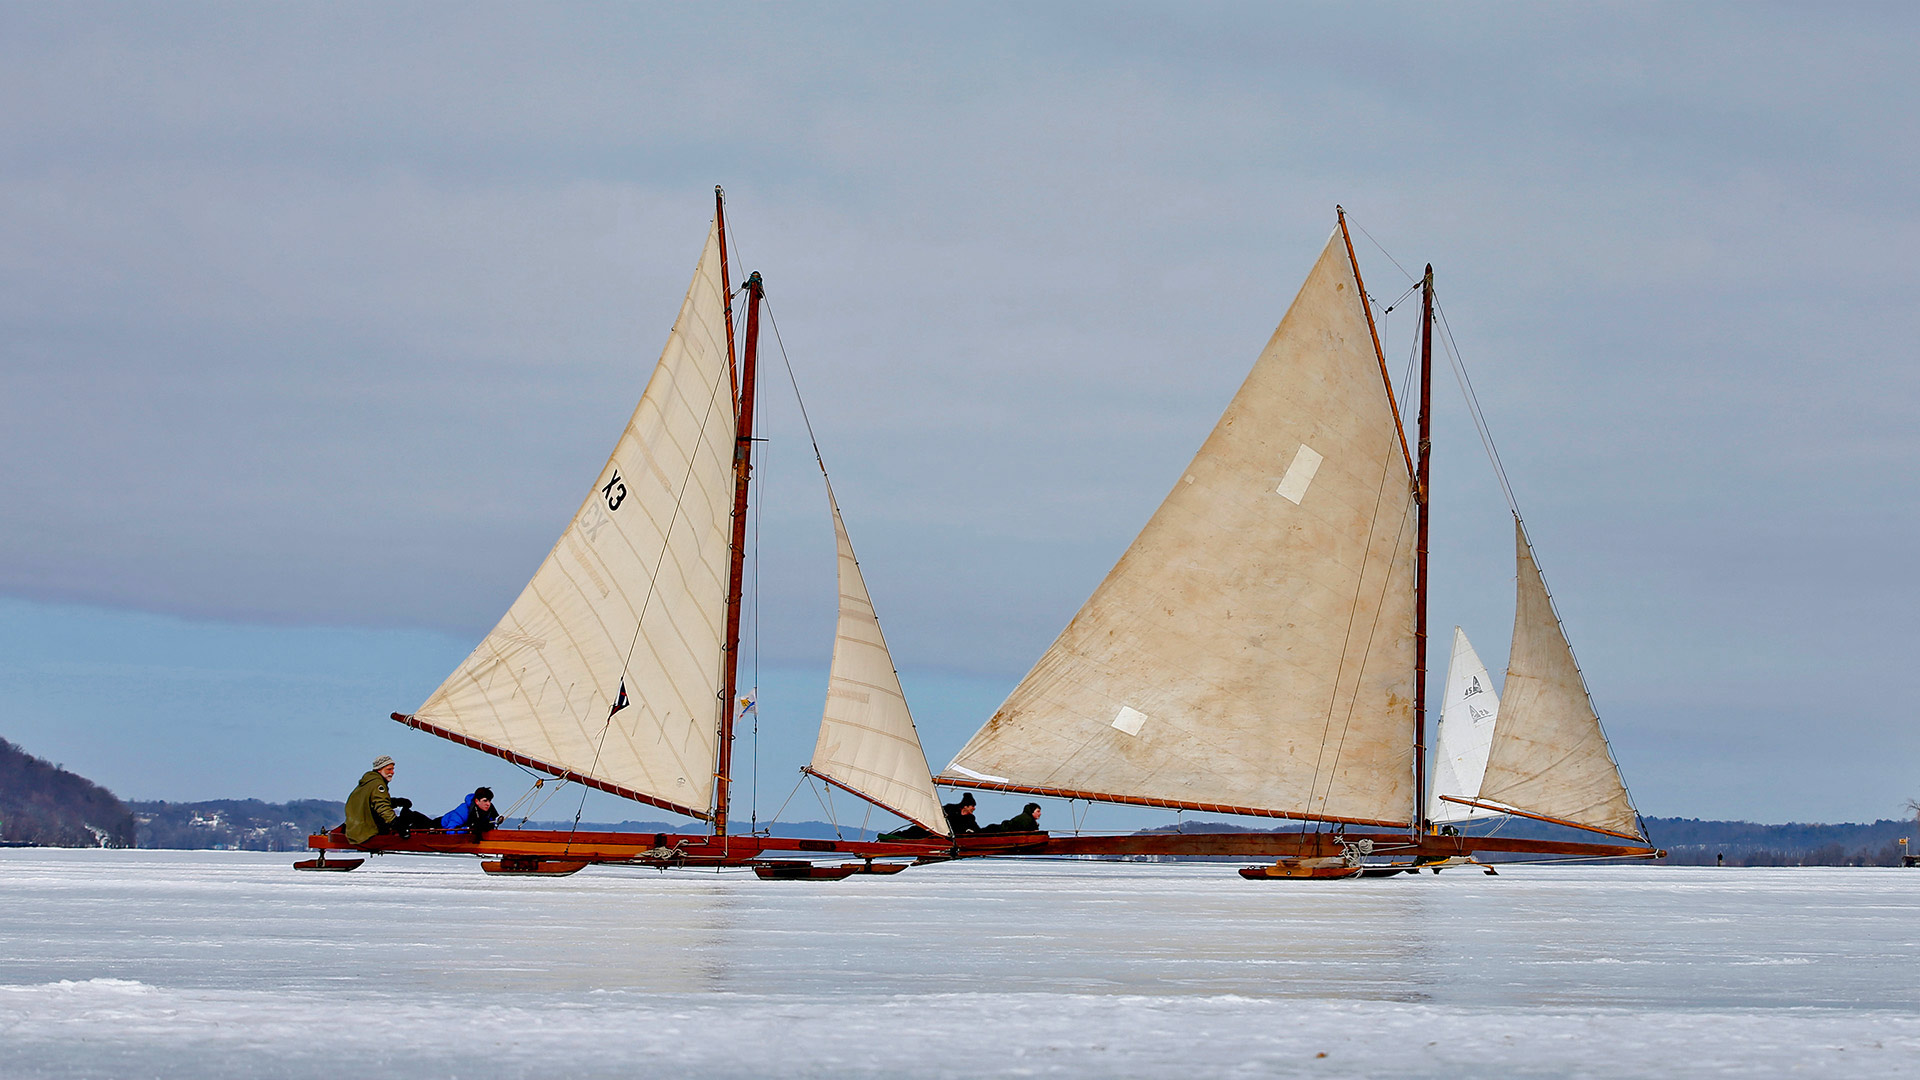 Ice Sailing